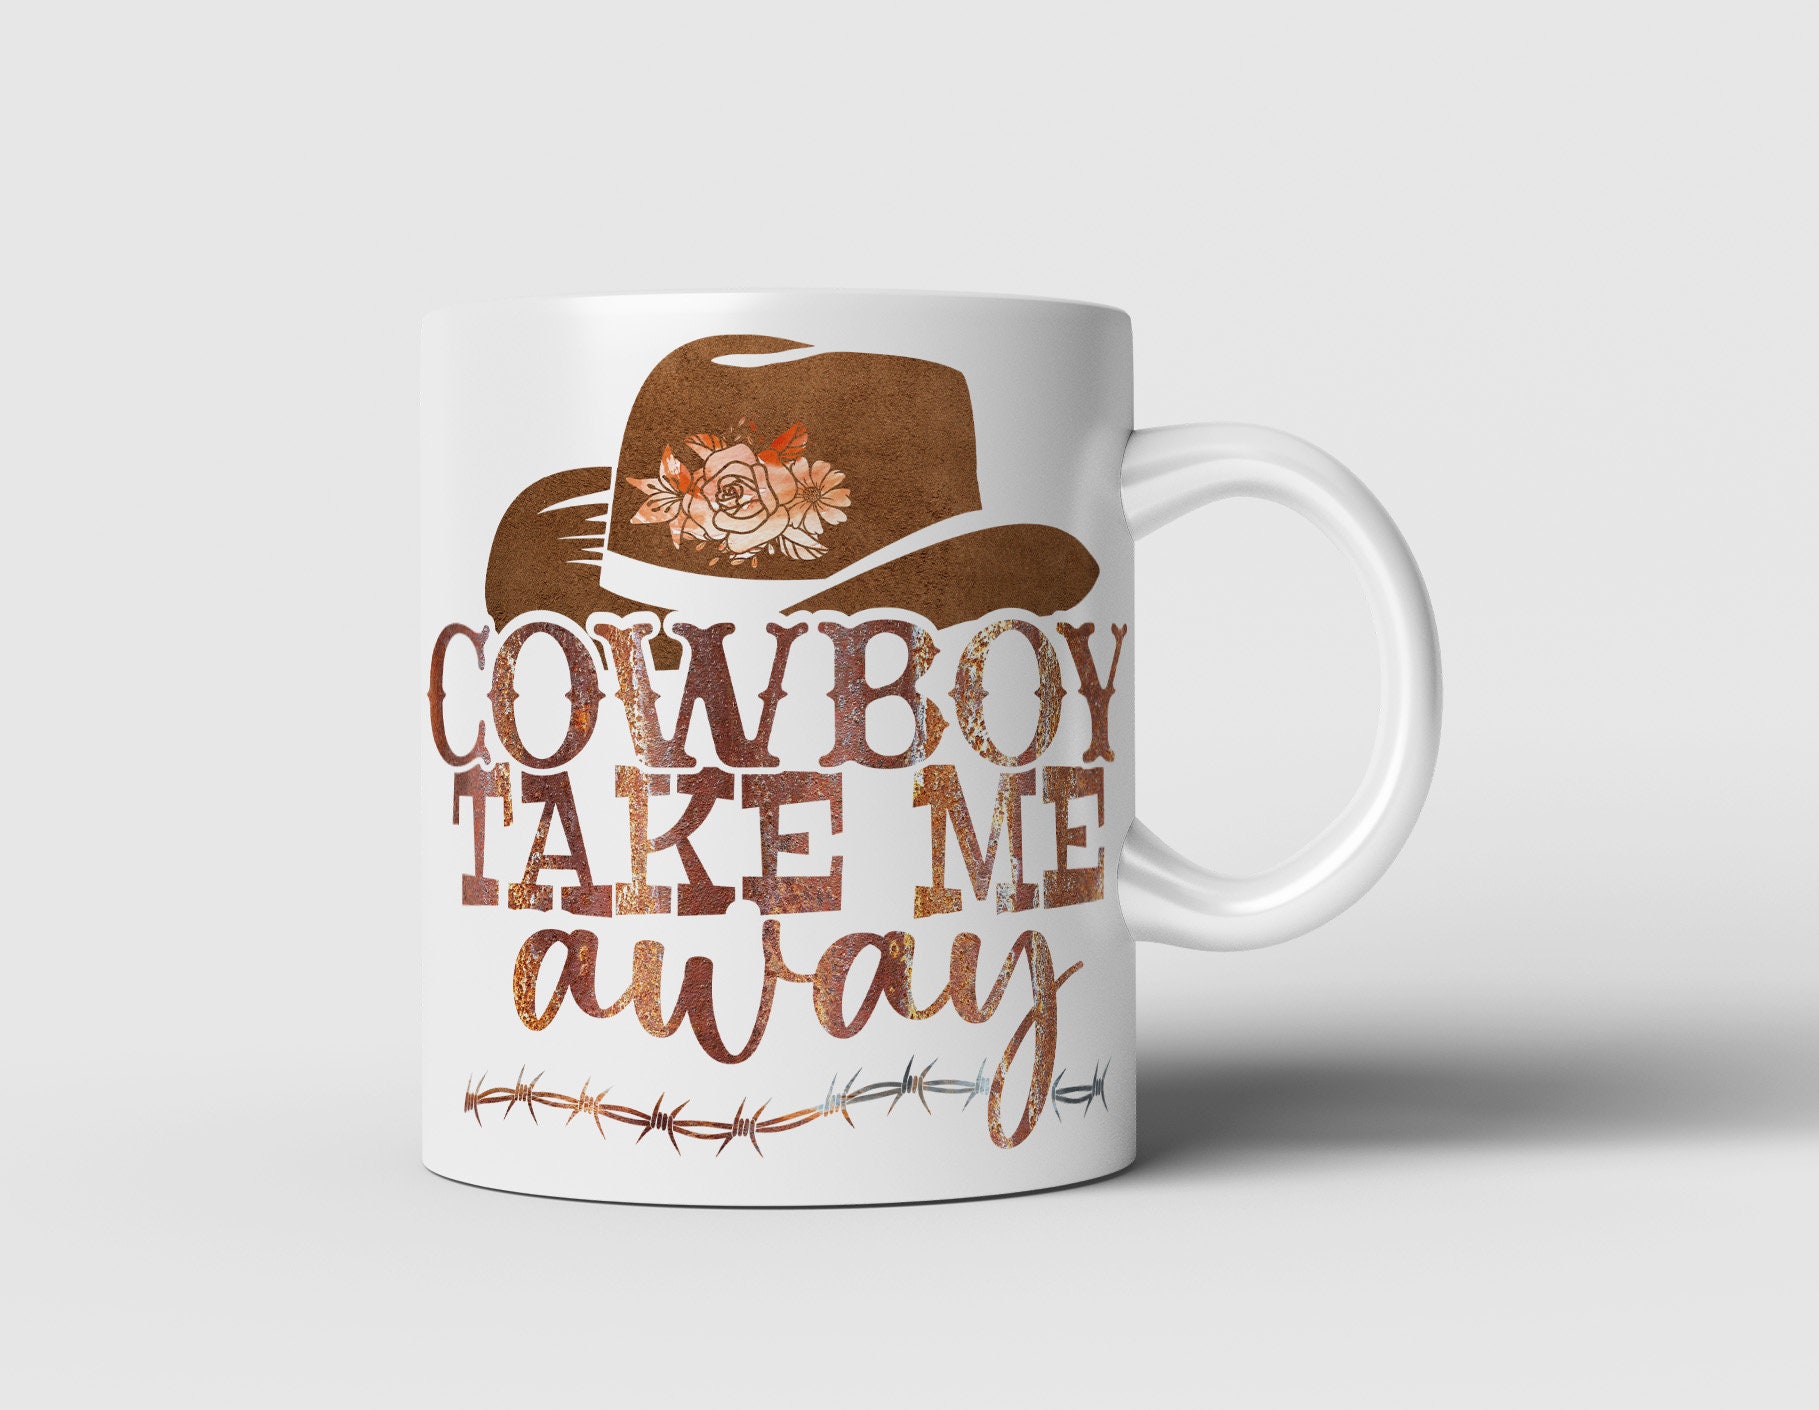 The World Needs More Cowboys Front & Back Coffee Mug